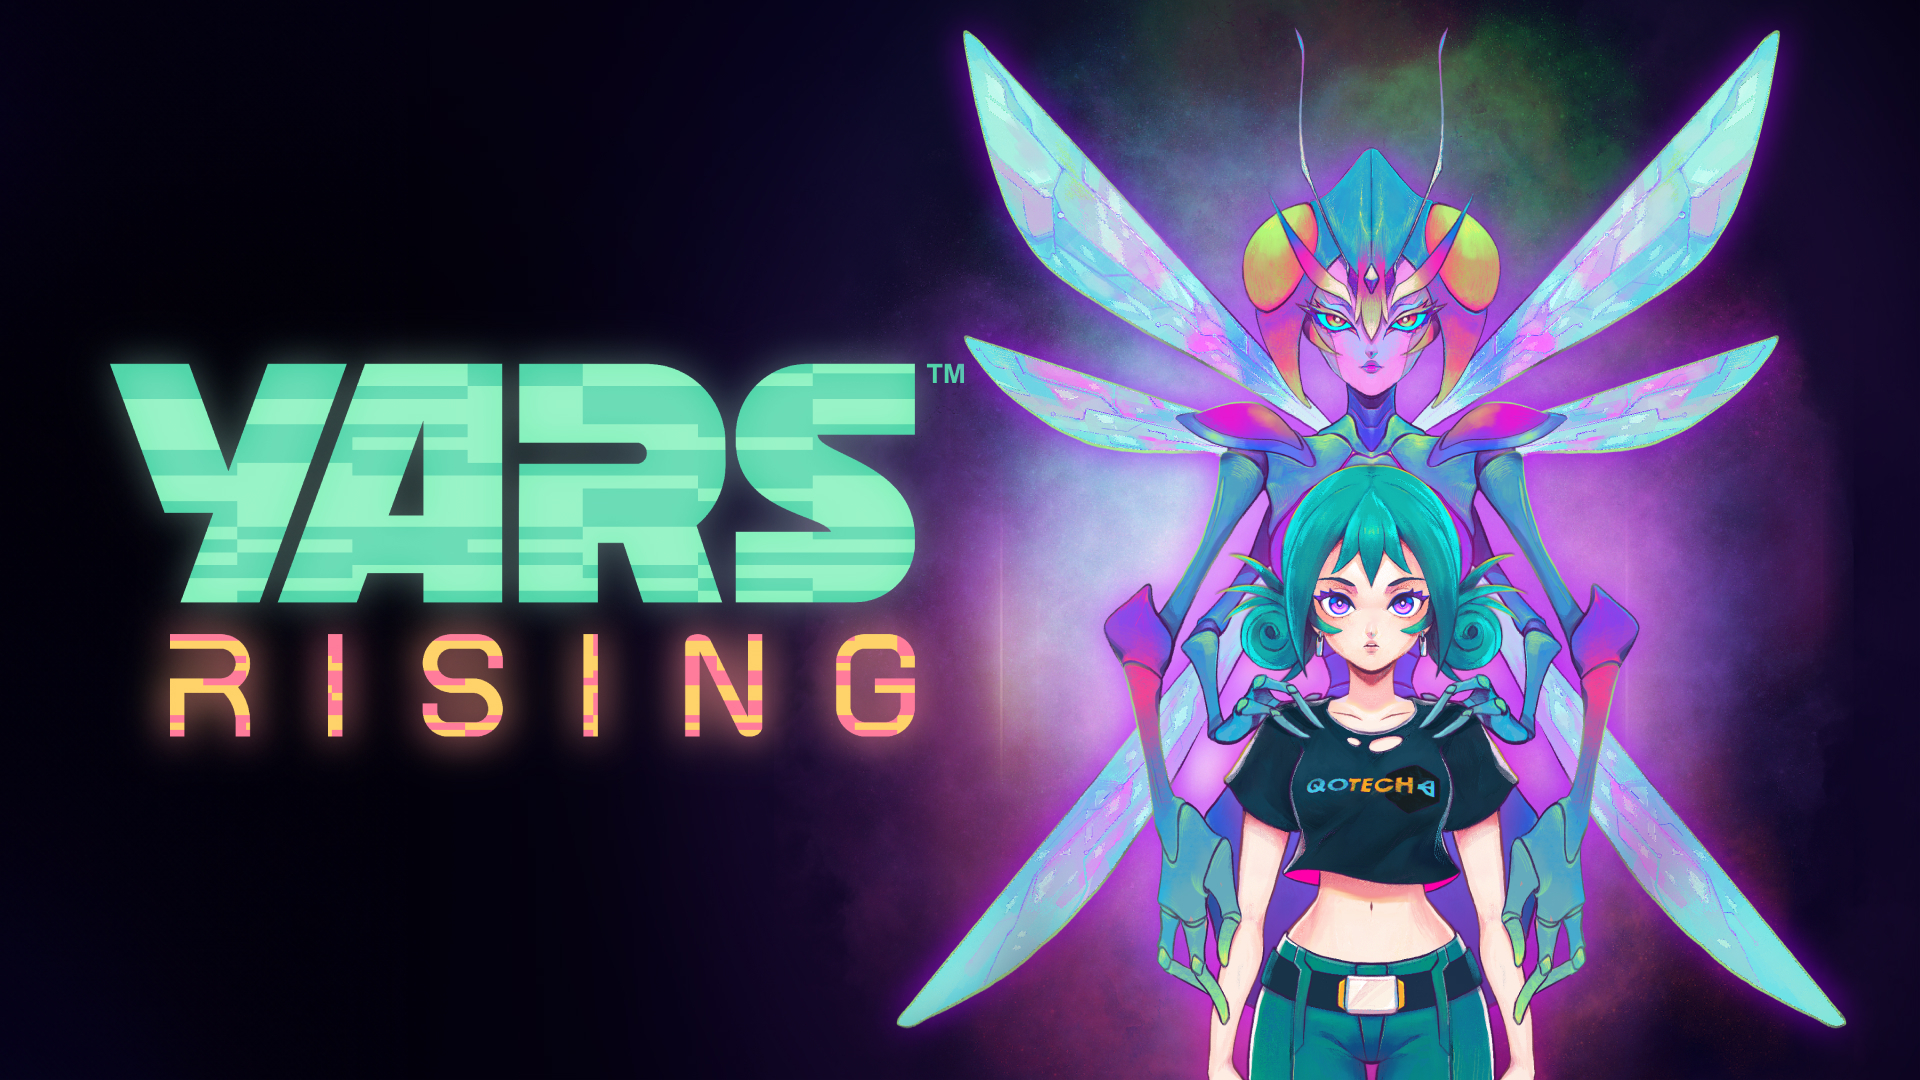 2D 动作冒险游戏《Yars Rising》预定 9 月中上市 操控年轻骇客渗透神秘组织